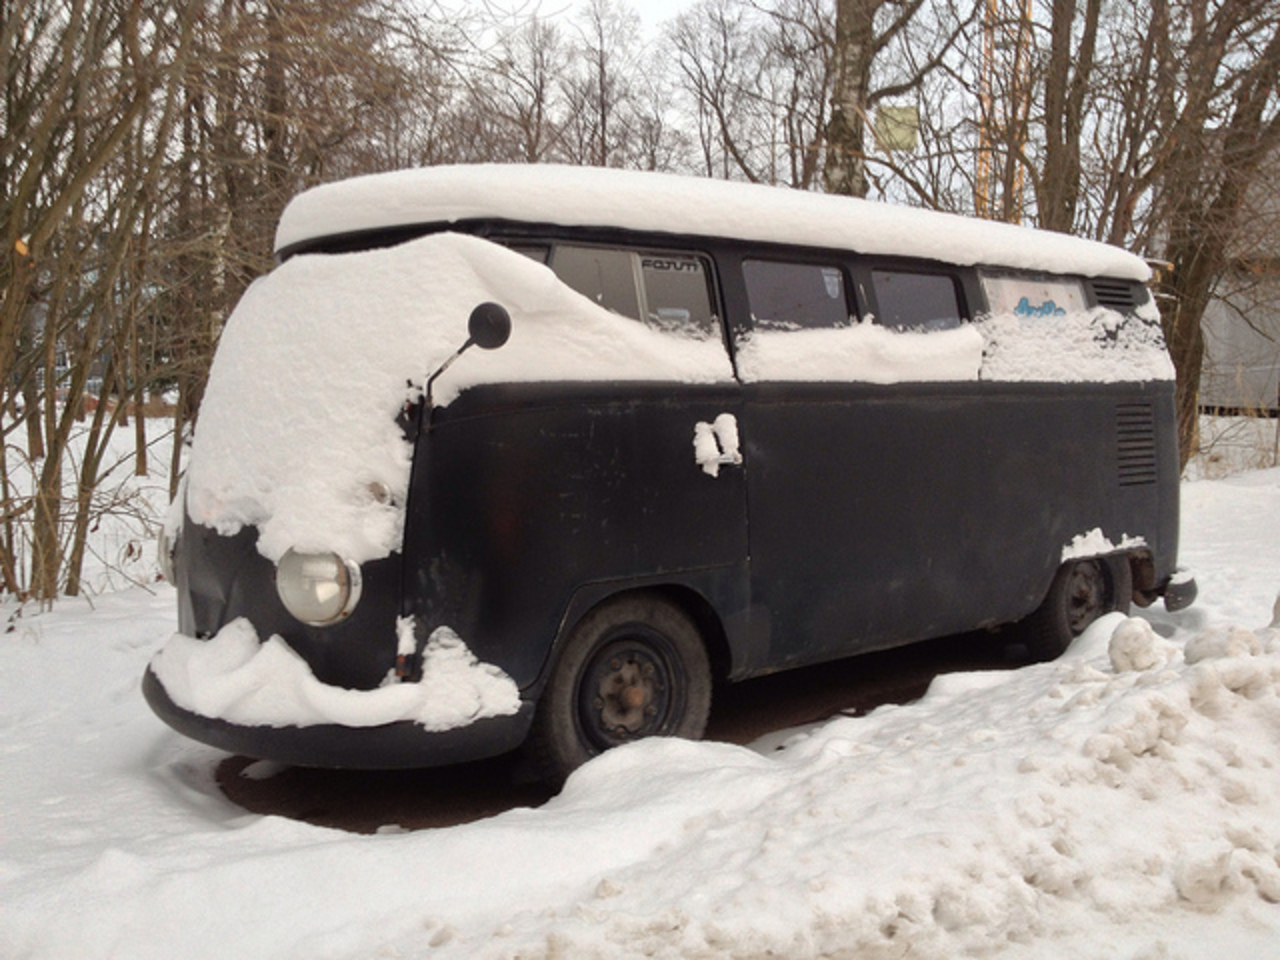 Volkswagen Kleinbus '65 covered in snow, Helsinki, Finland ...